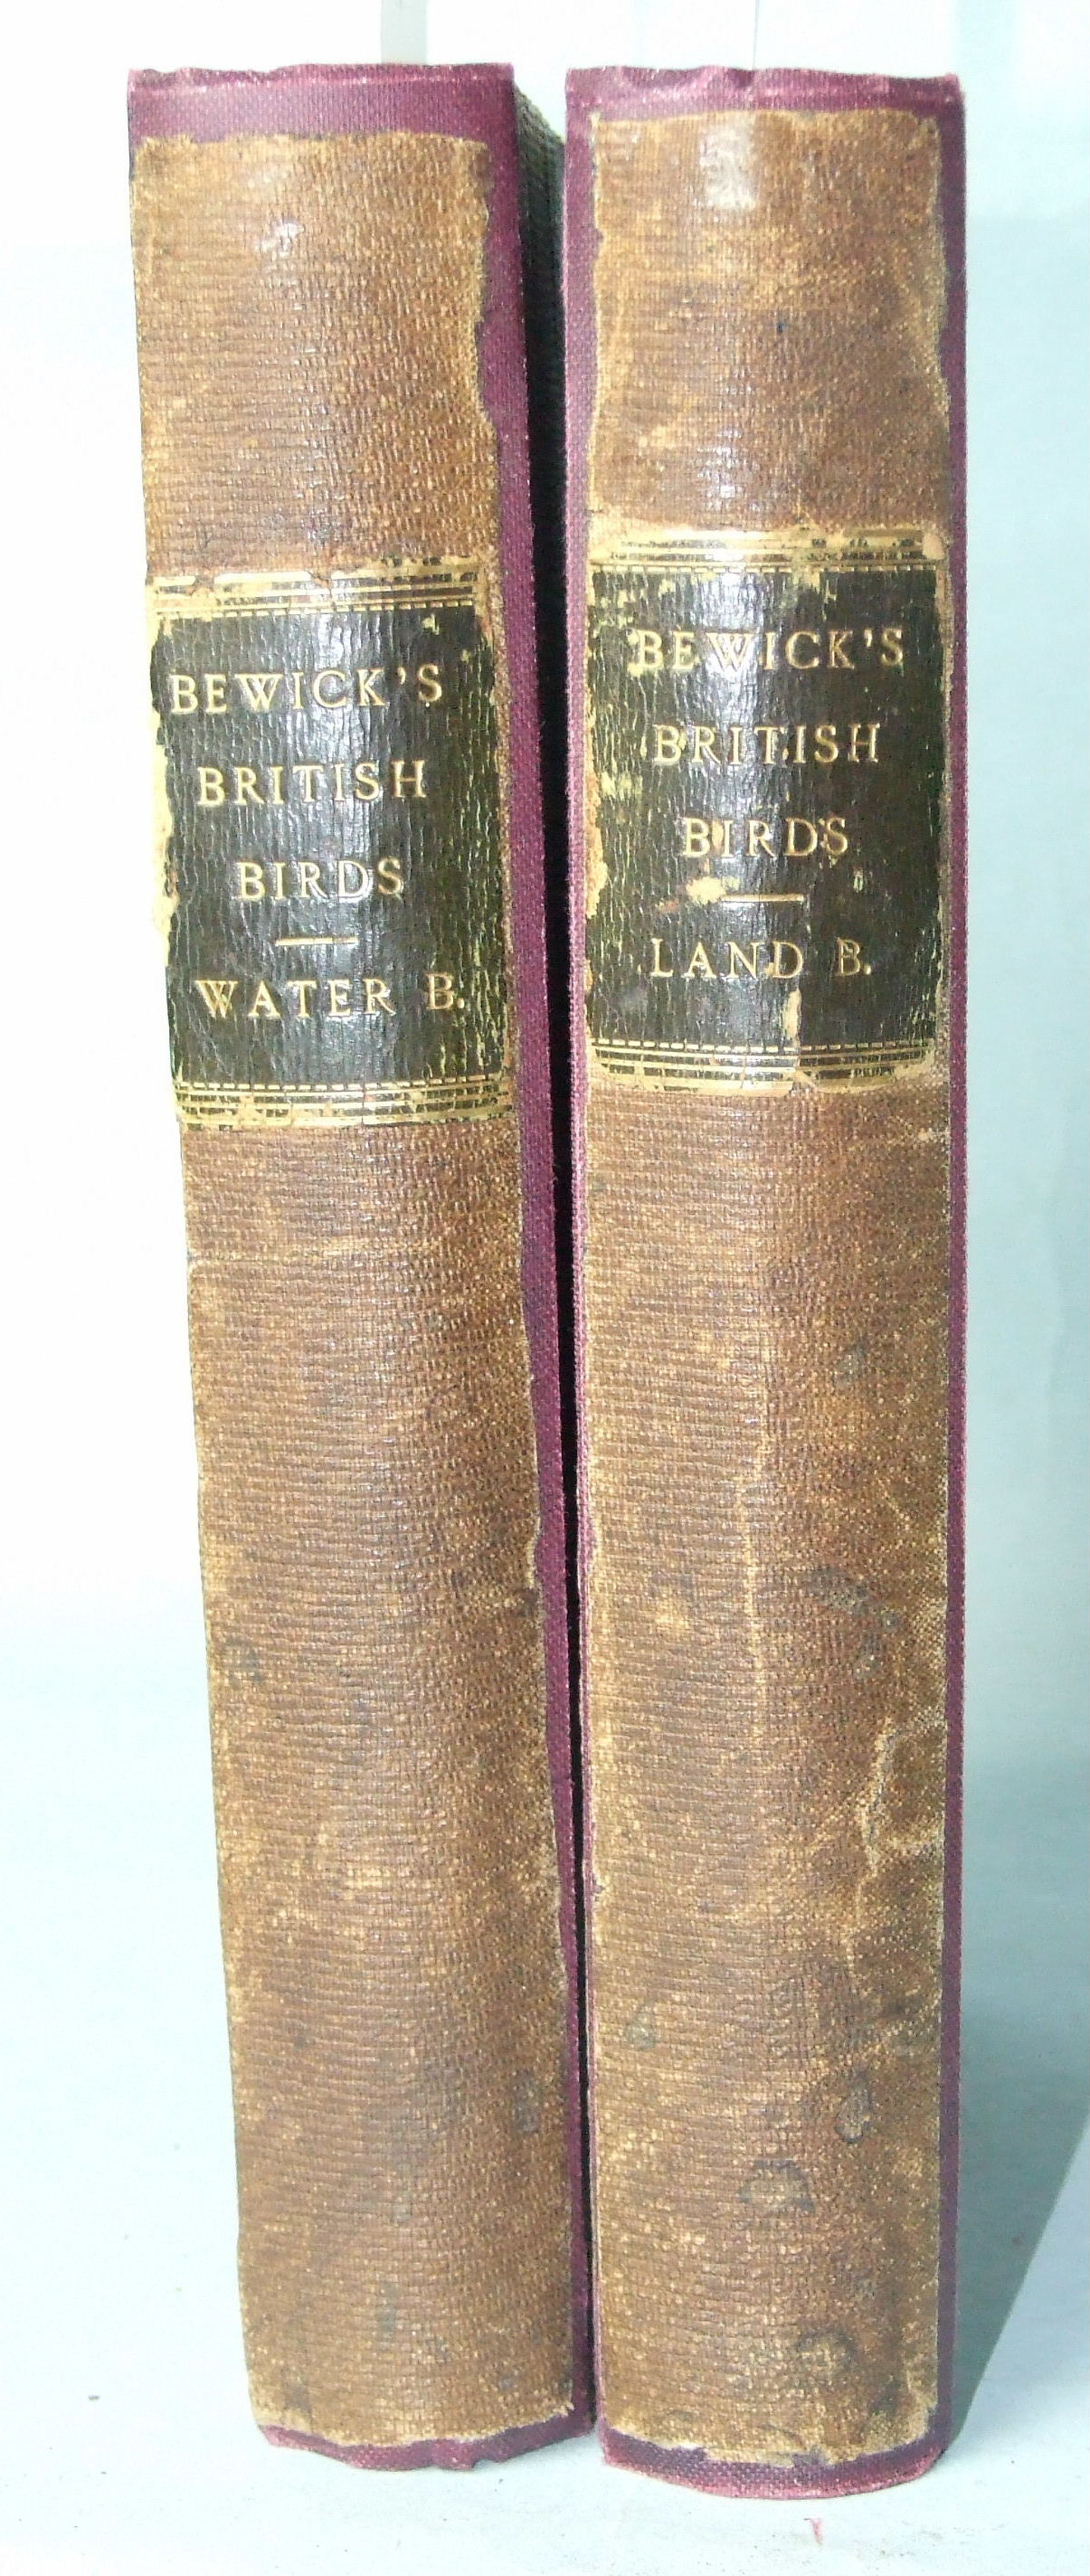 Bewick (Thomas), A History of British Birds, 2 vols, illus, rebound cl gt, 8vo, 1847.